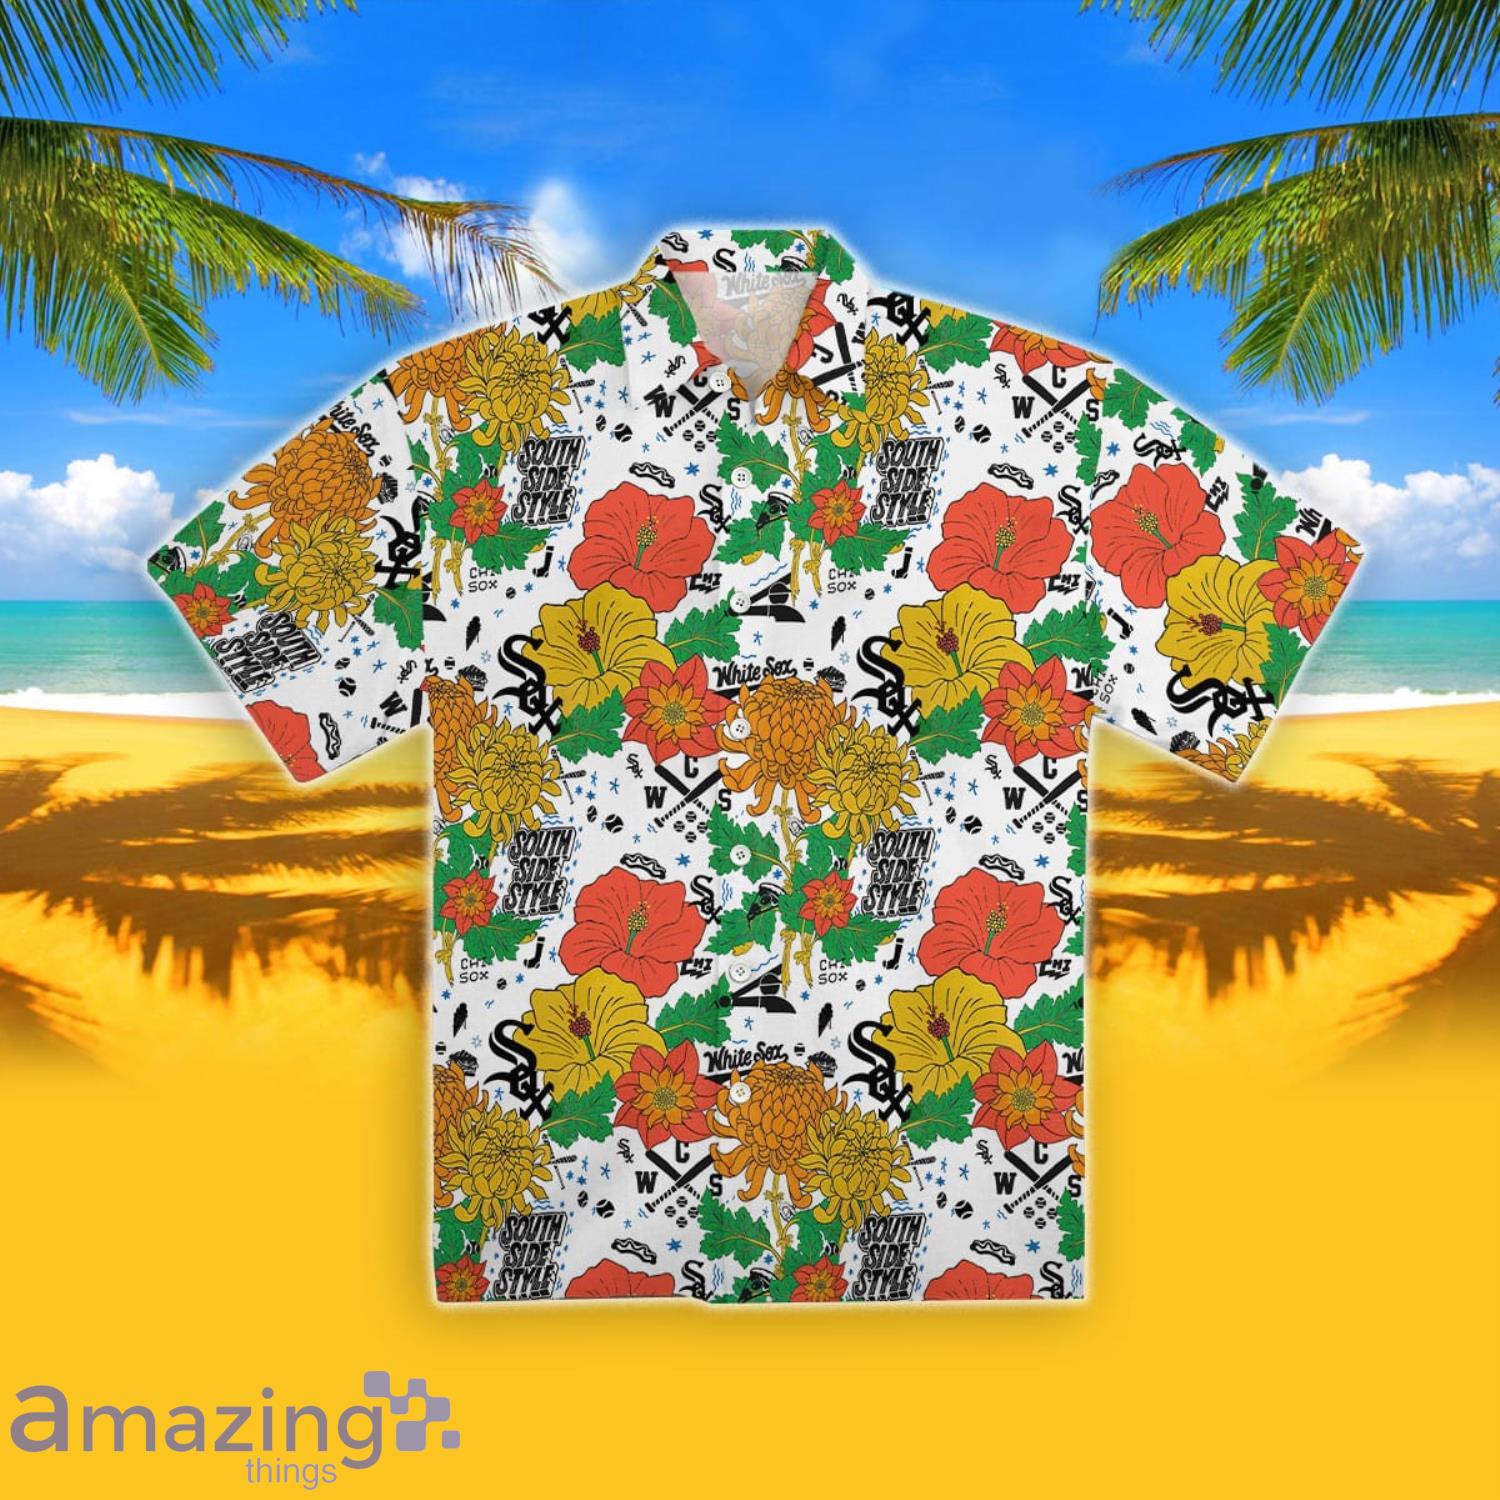 Chicago White Sox Cute Summer Gift Hawaiian Shirt For Men And Women -  Freedomdesign